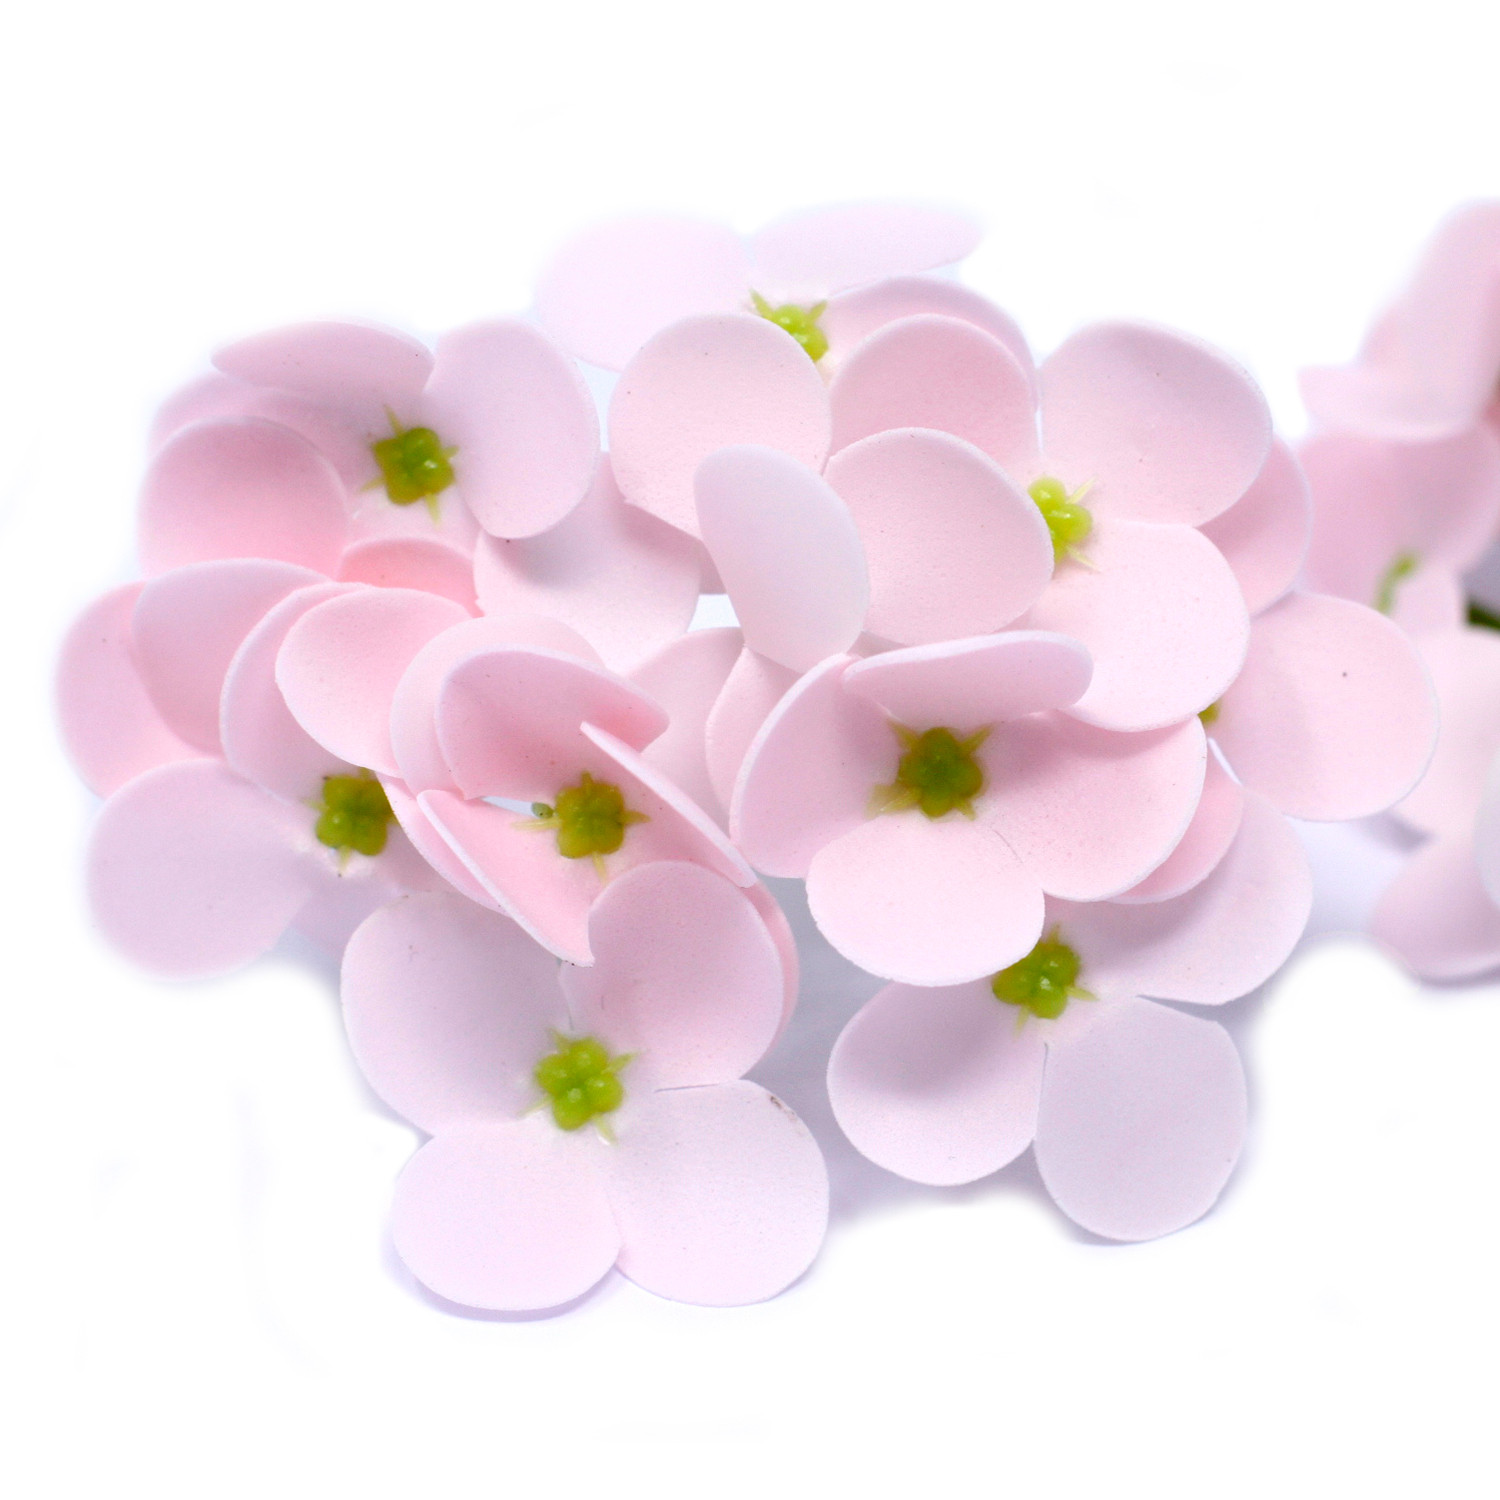 10 x Craft Soap Flowers - Hyacinth Bean - Pink